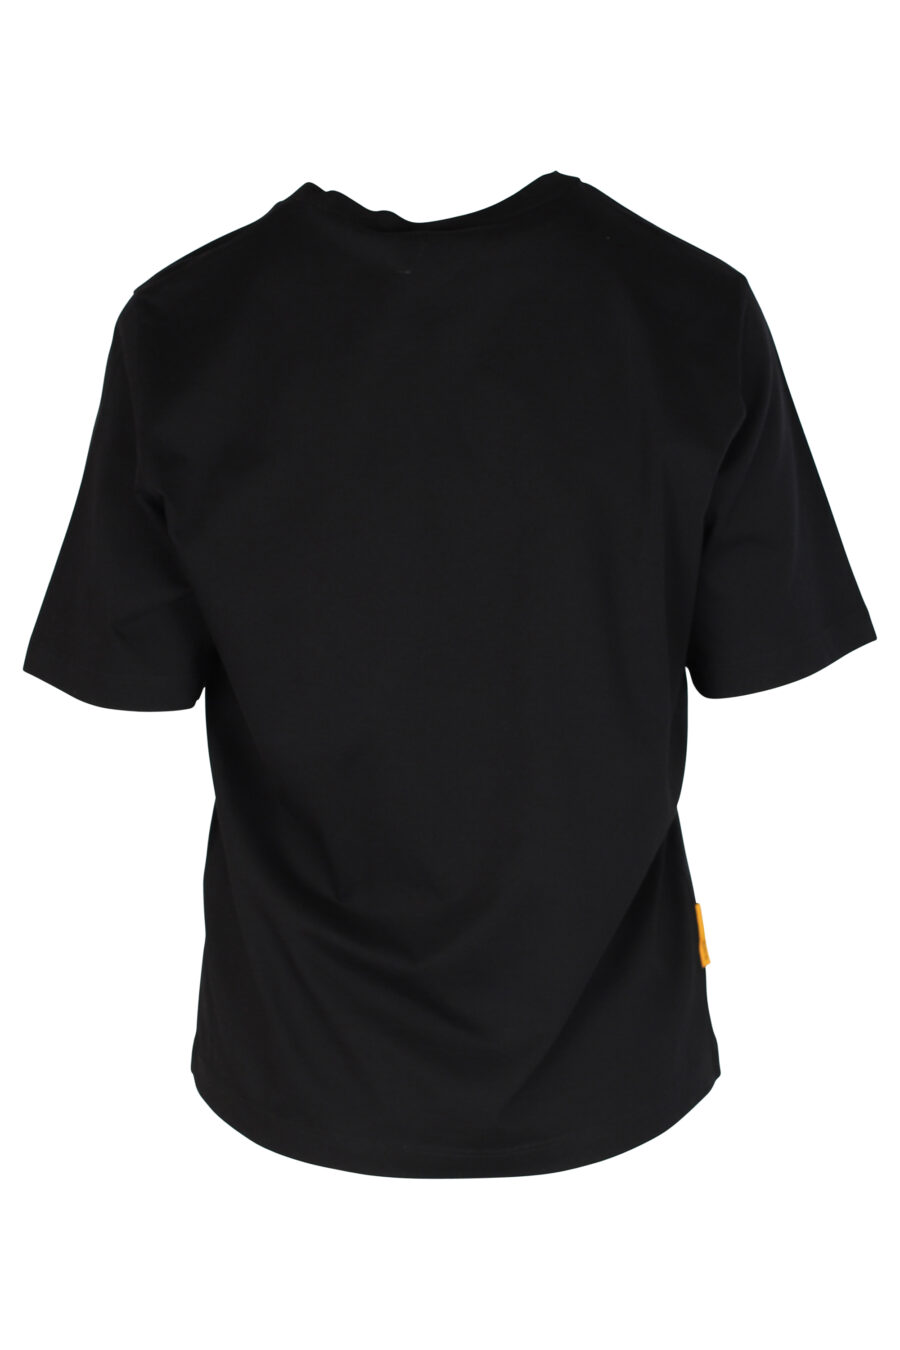 Camiseta negra con logo "Pac-man" - 8054148185558 2